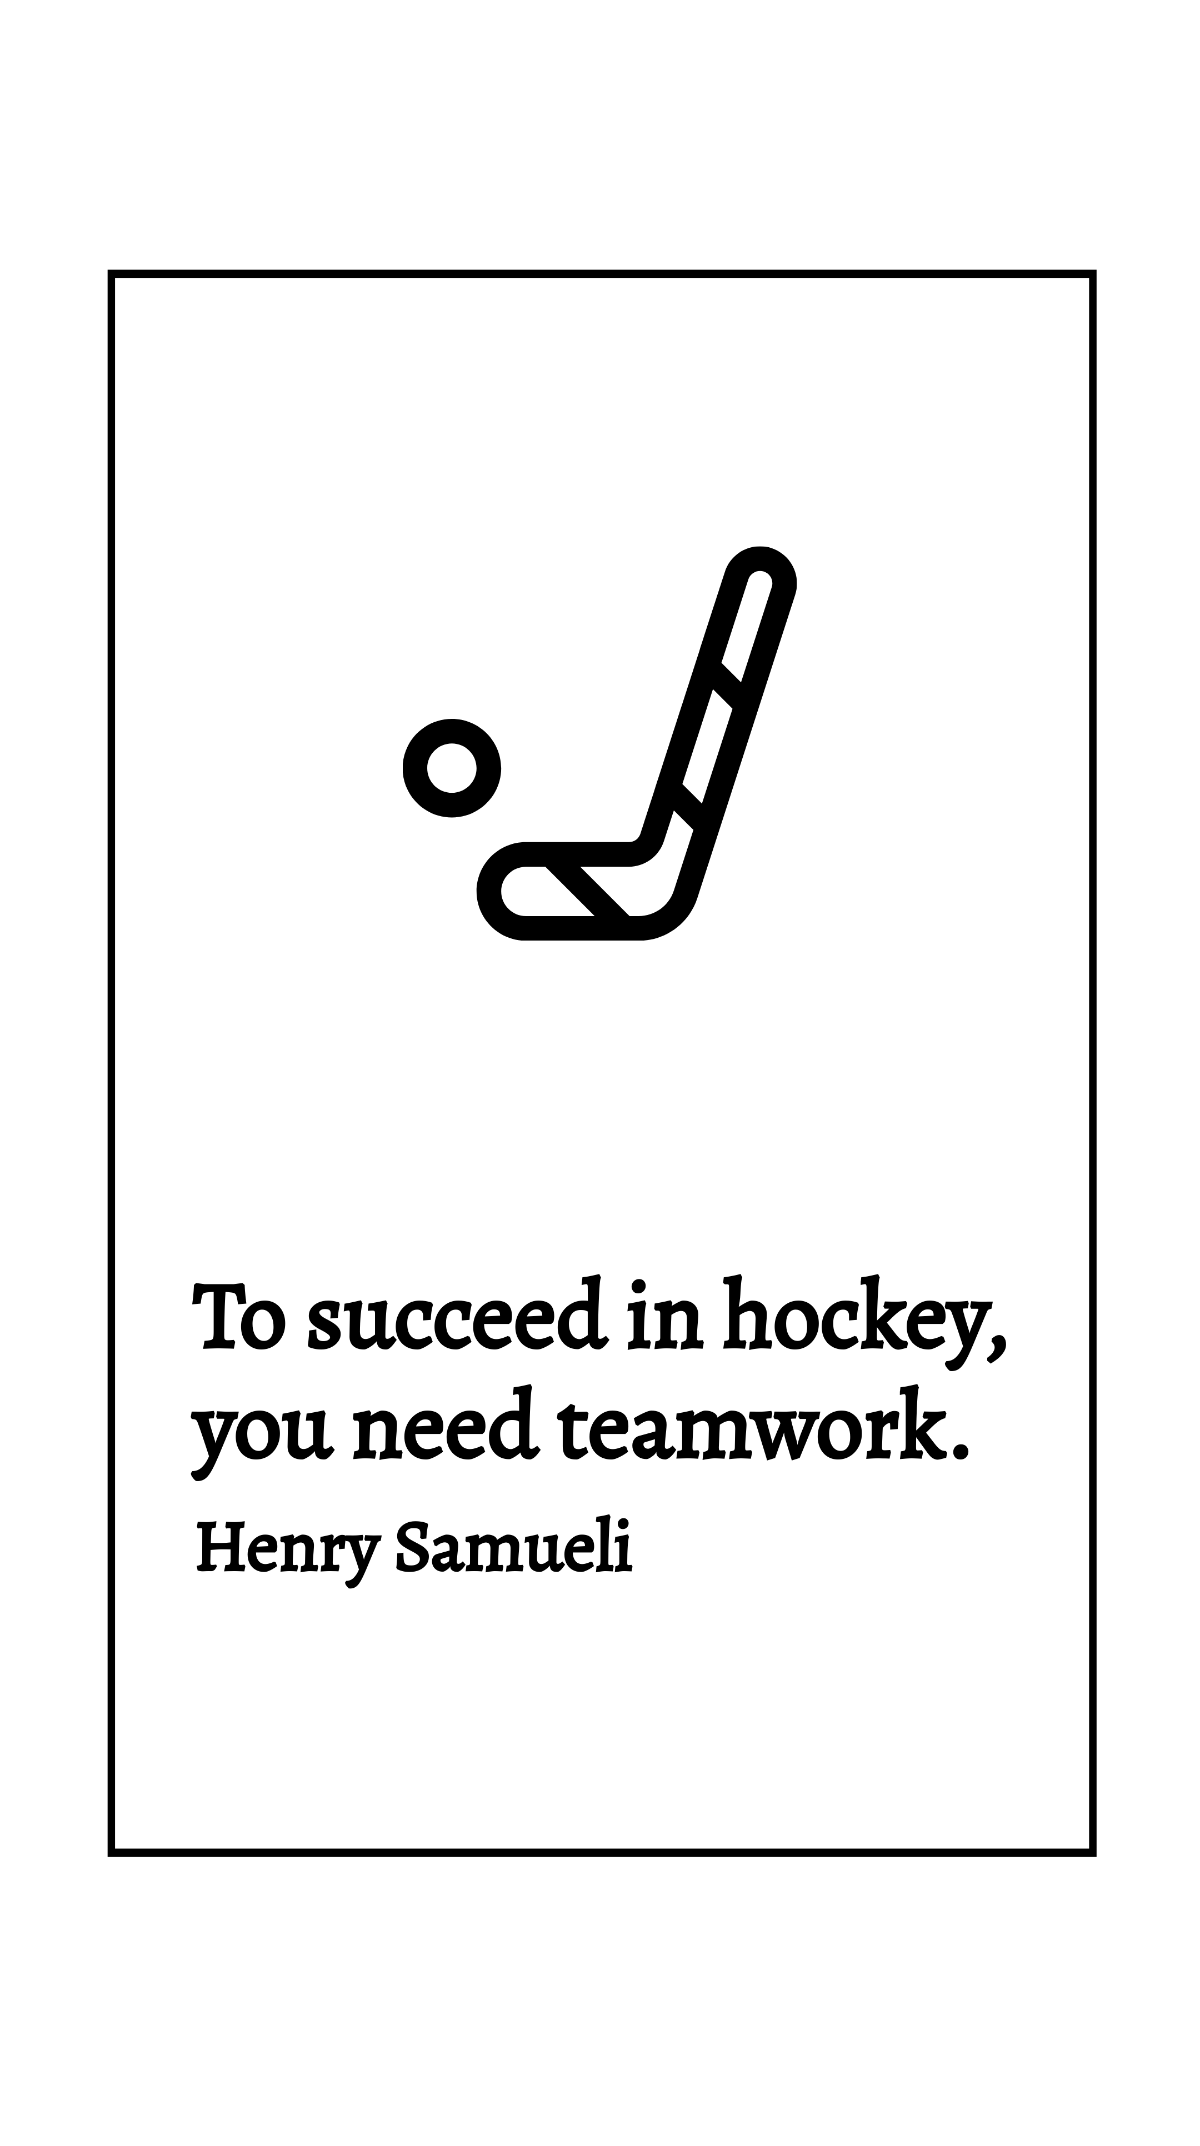 Free Henry Samueli - To succeed in hockey, you need teamwork. Template